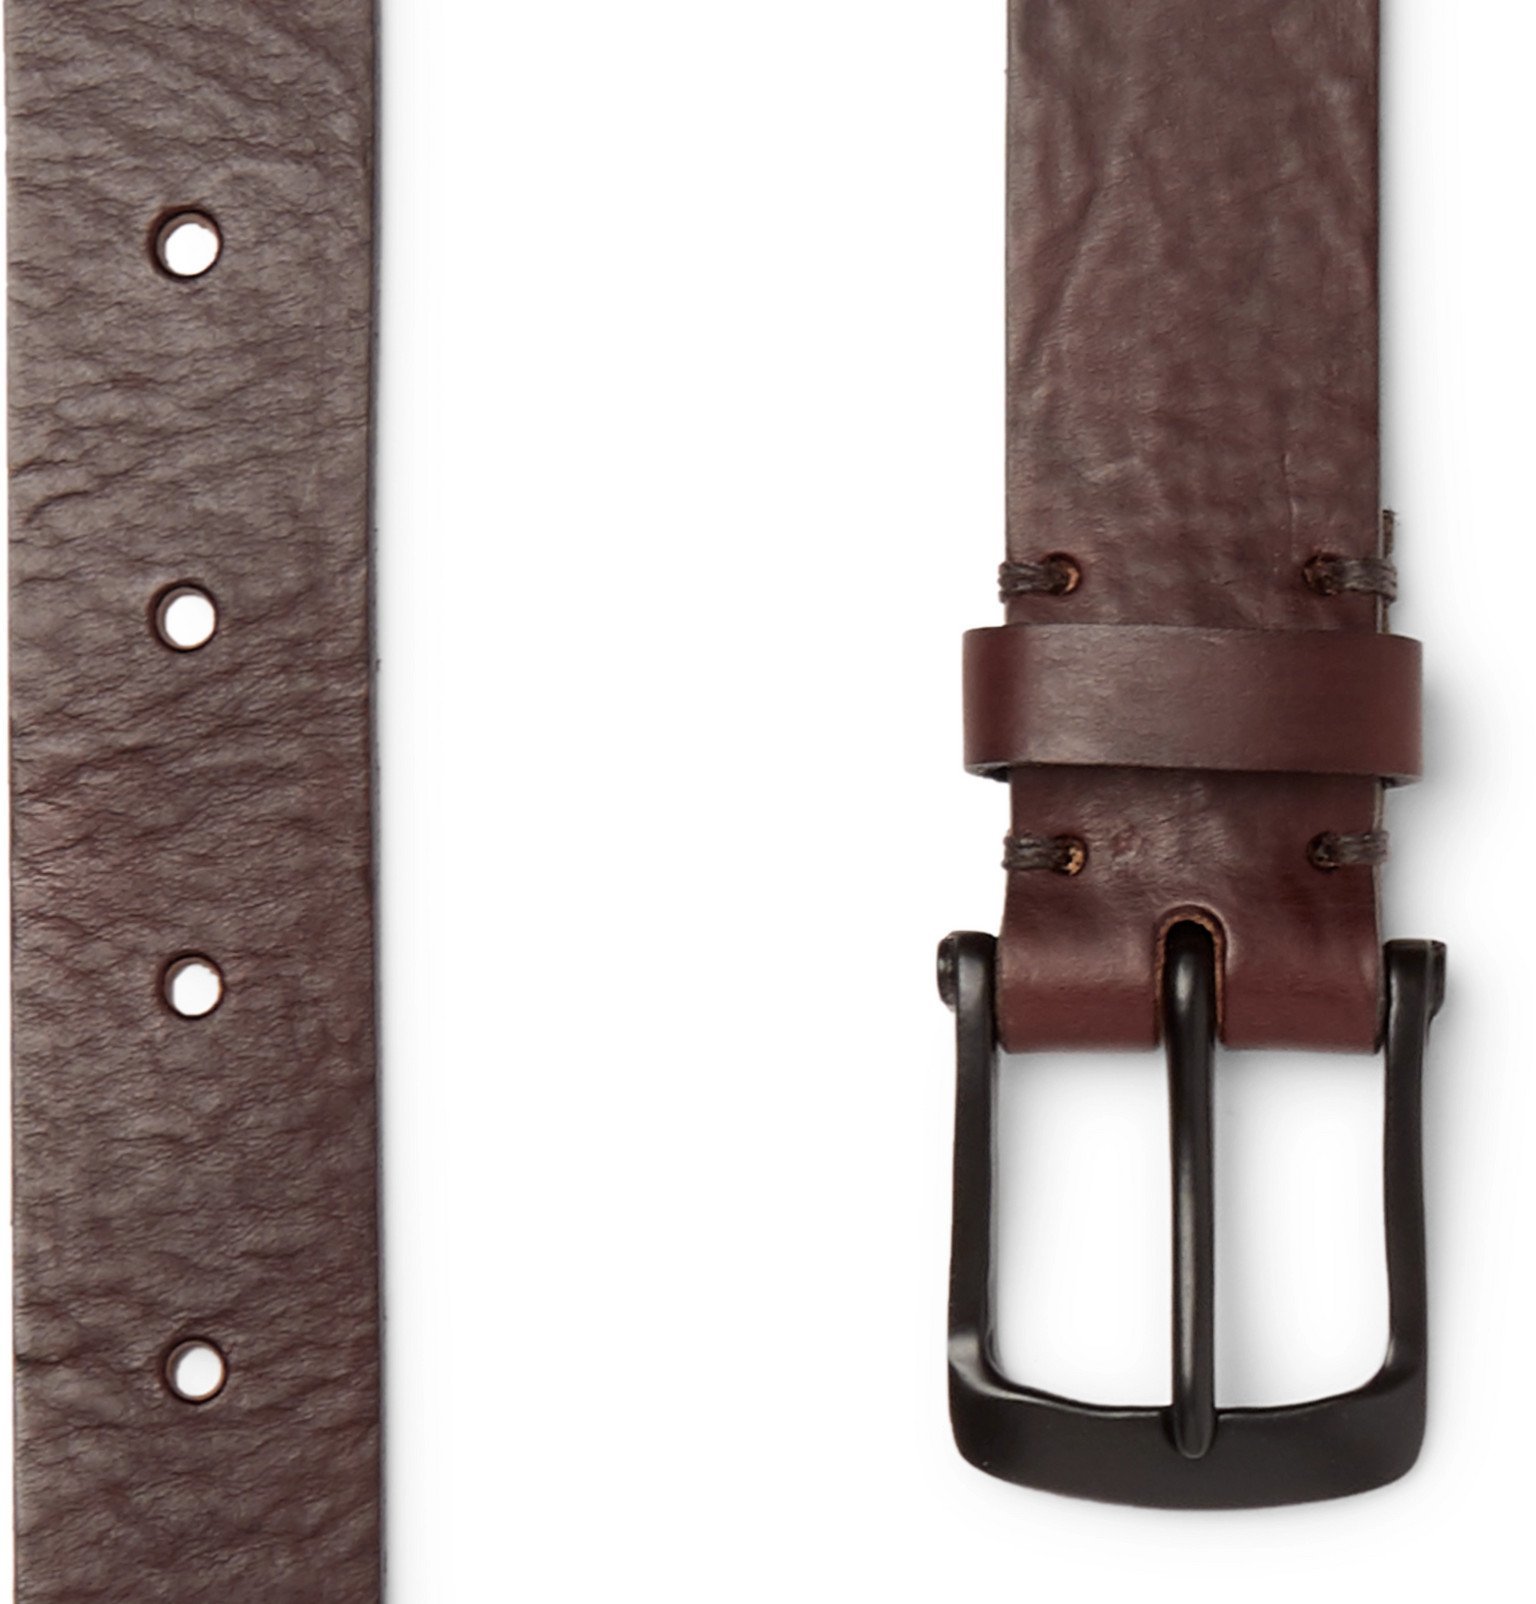 Oliver Spencer - 3cm Chocolate Barrow Leather Belt - Brown